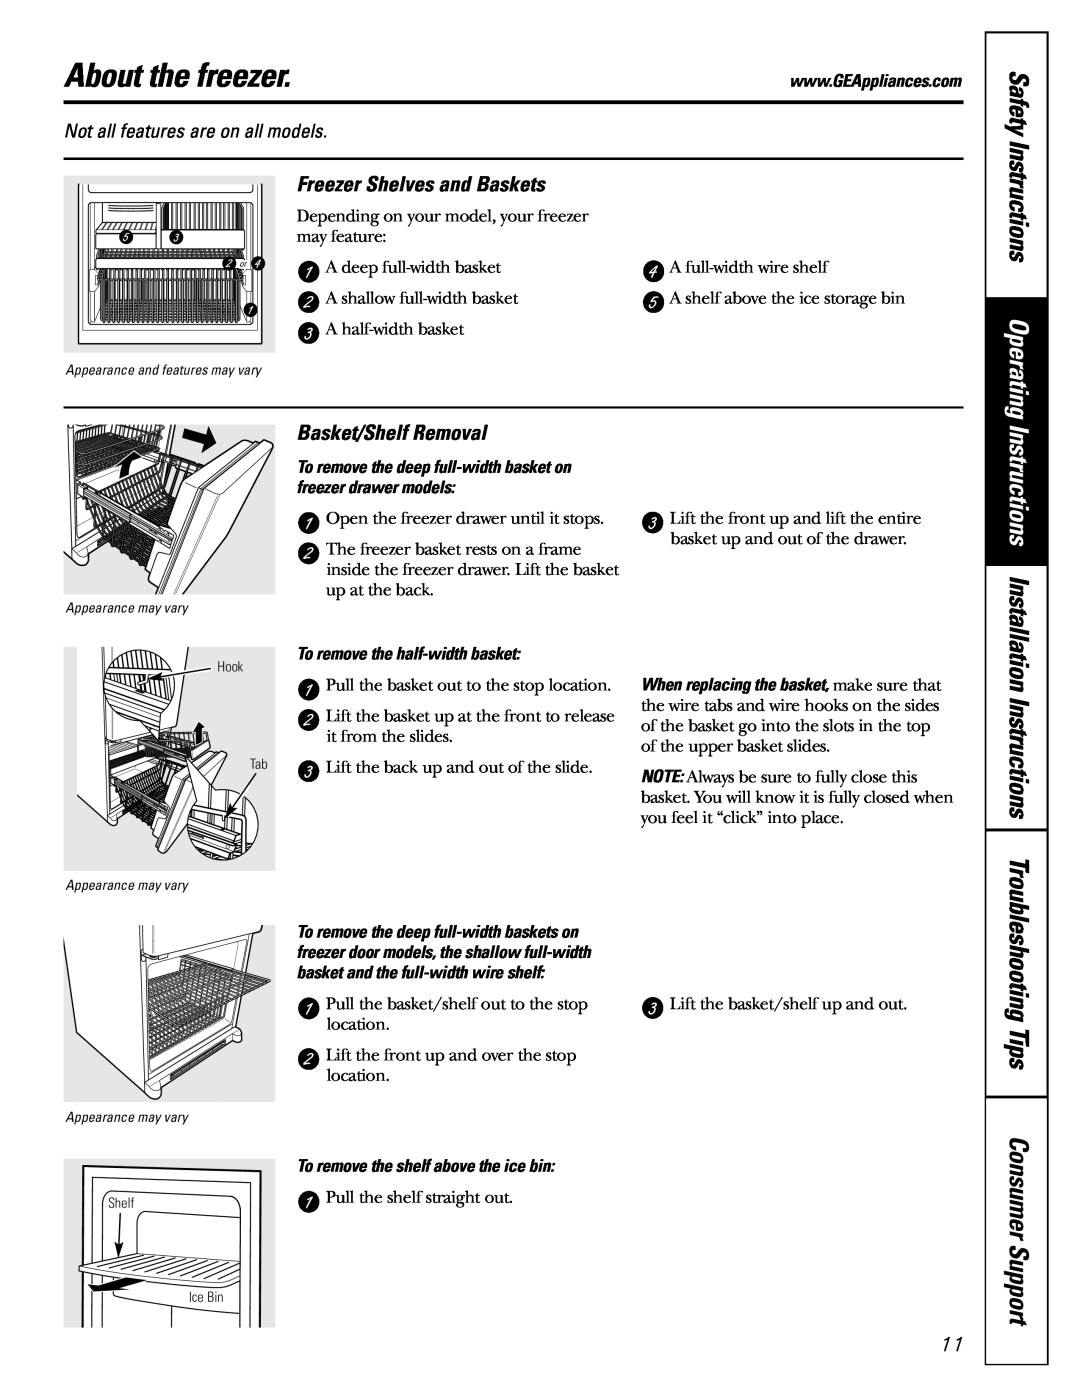 GE Monogram 20, 22 About the freezer, Instructions Operating, Freezer Shelves and Baskets, Basket/Shelf Removal, Safety 